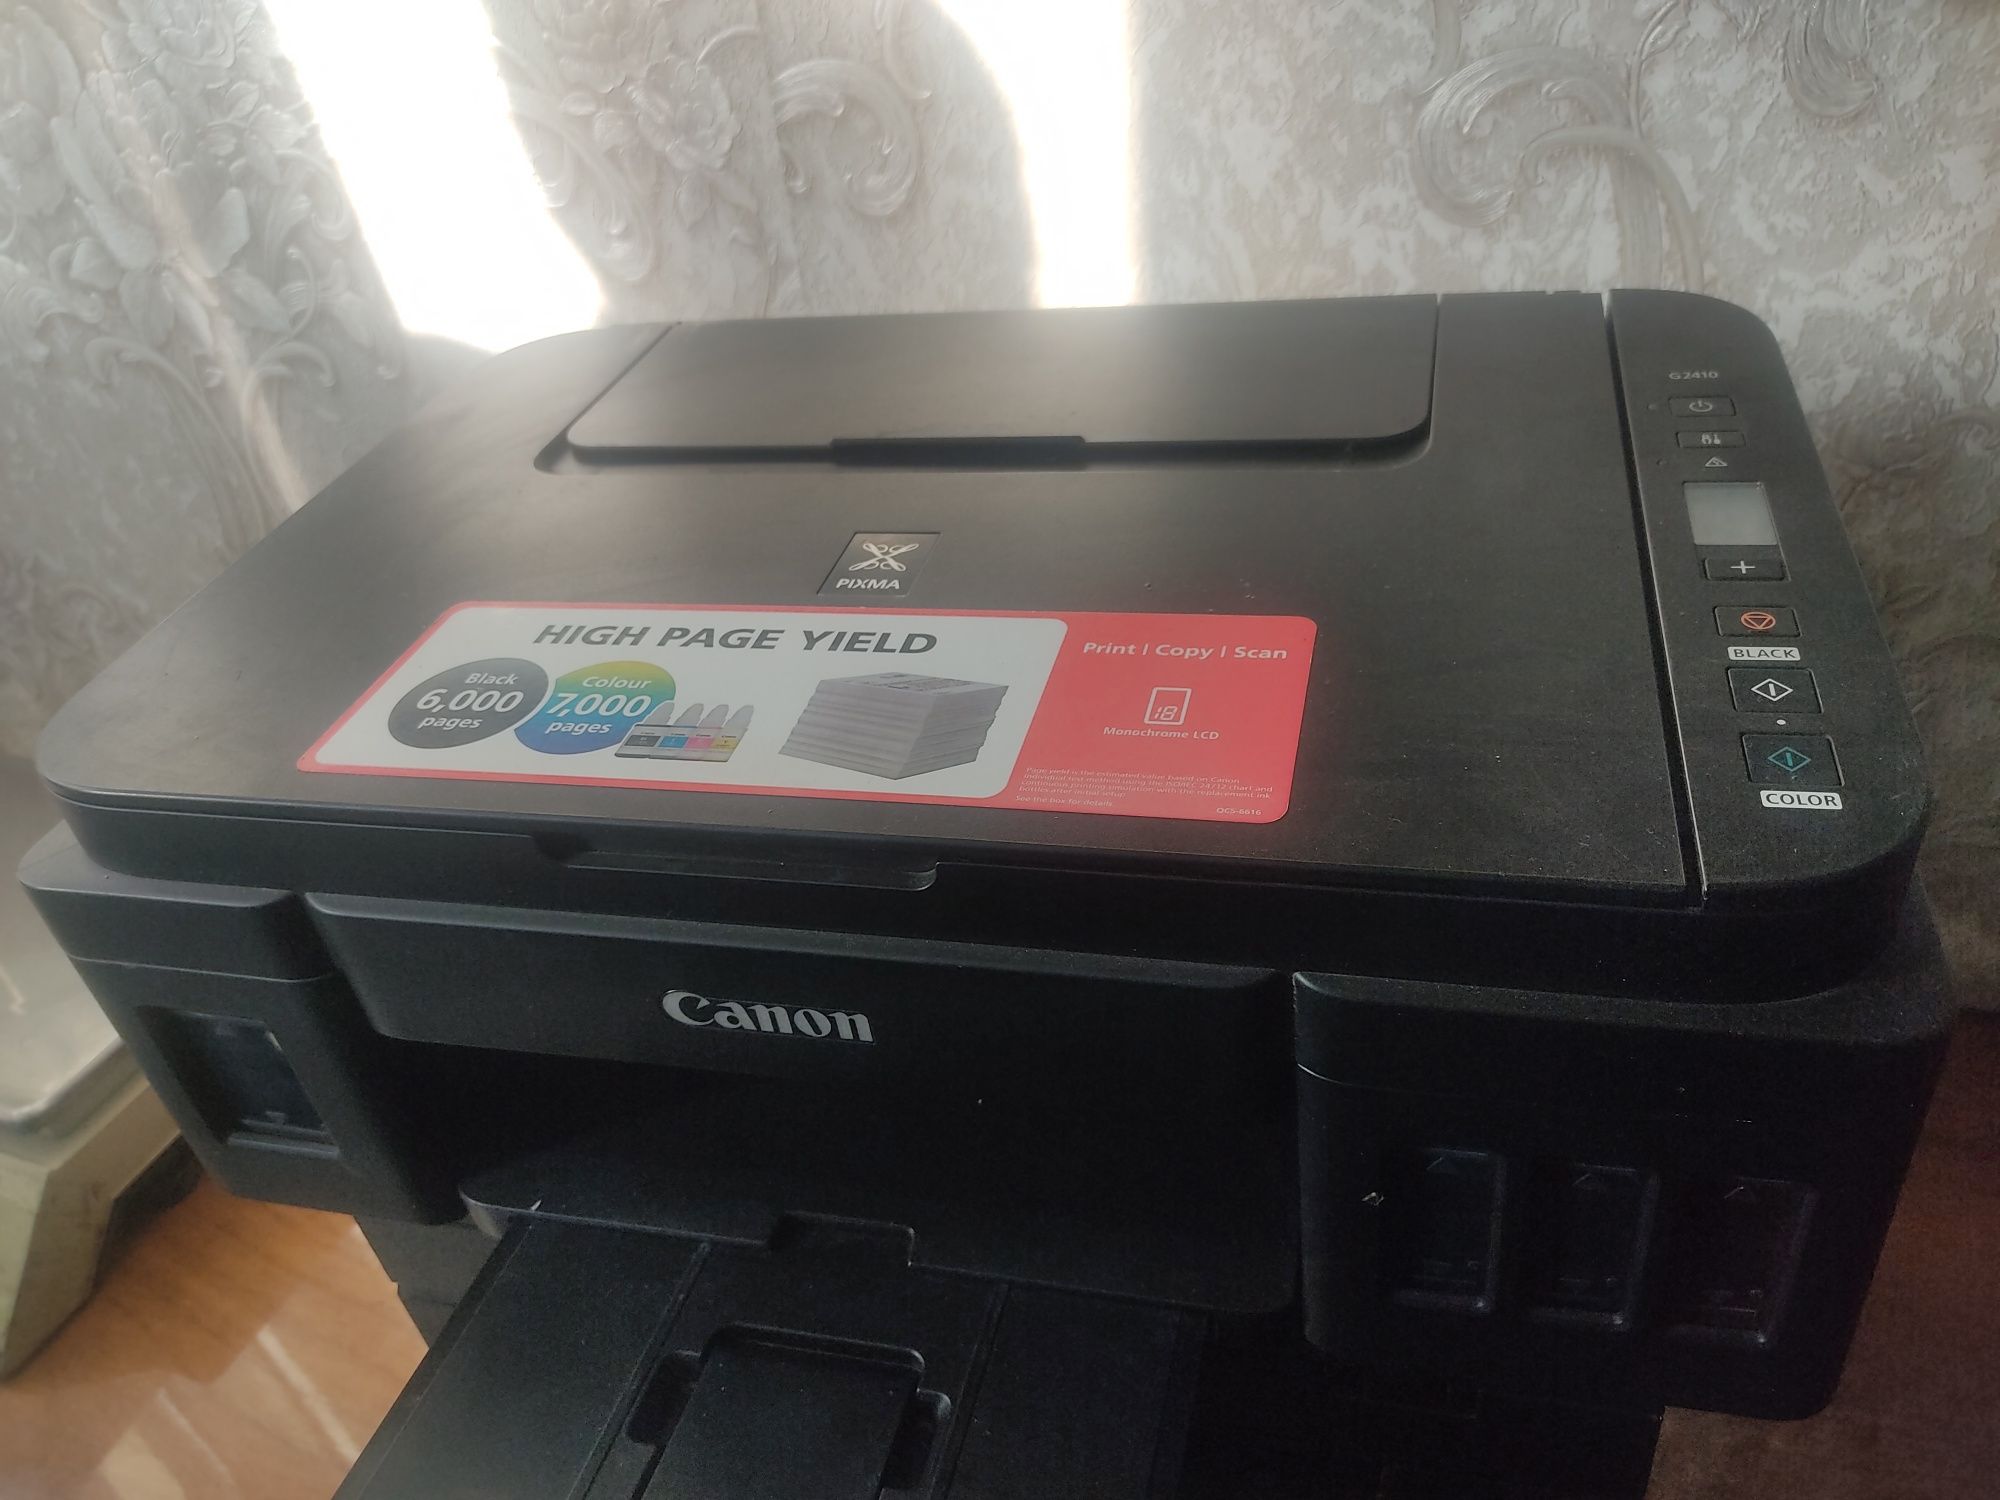 Ganon G2410 printer